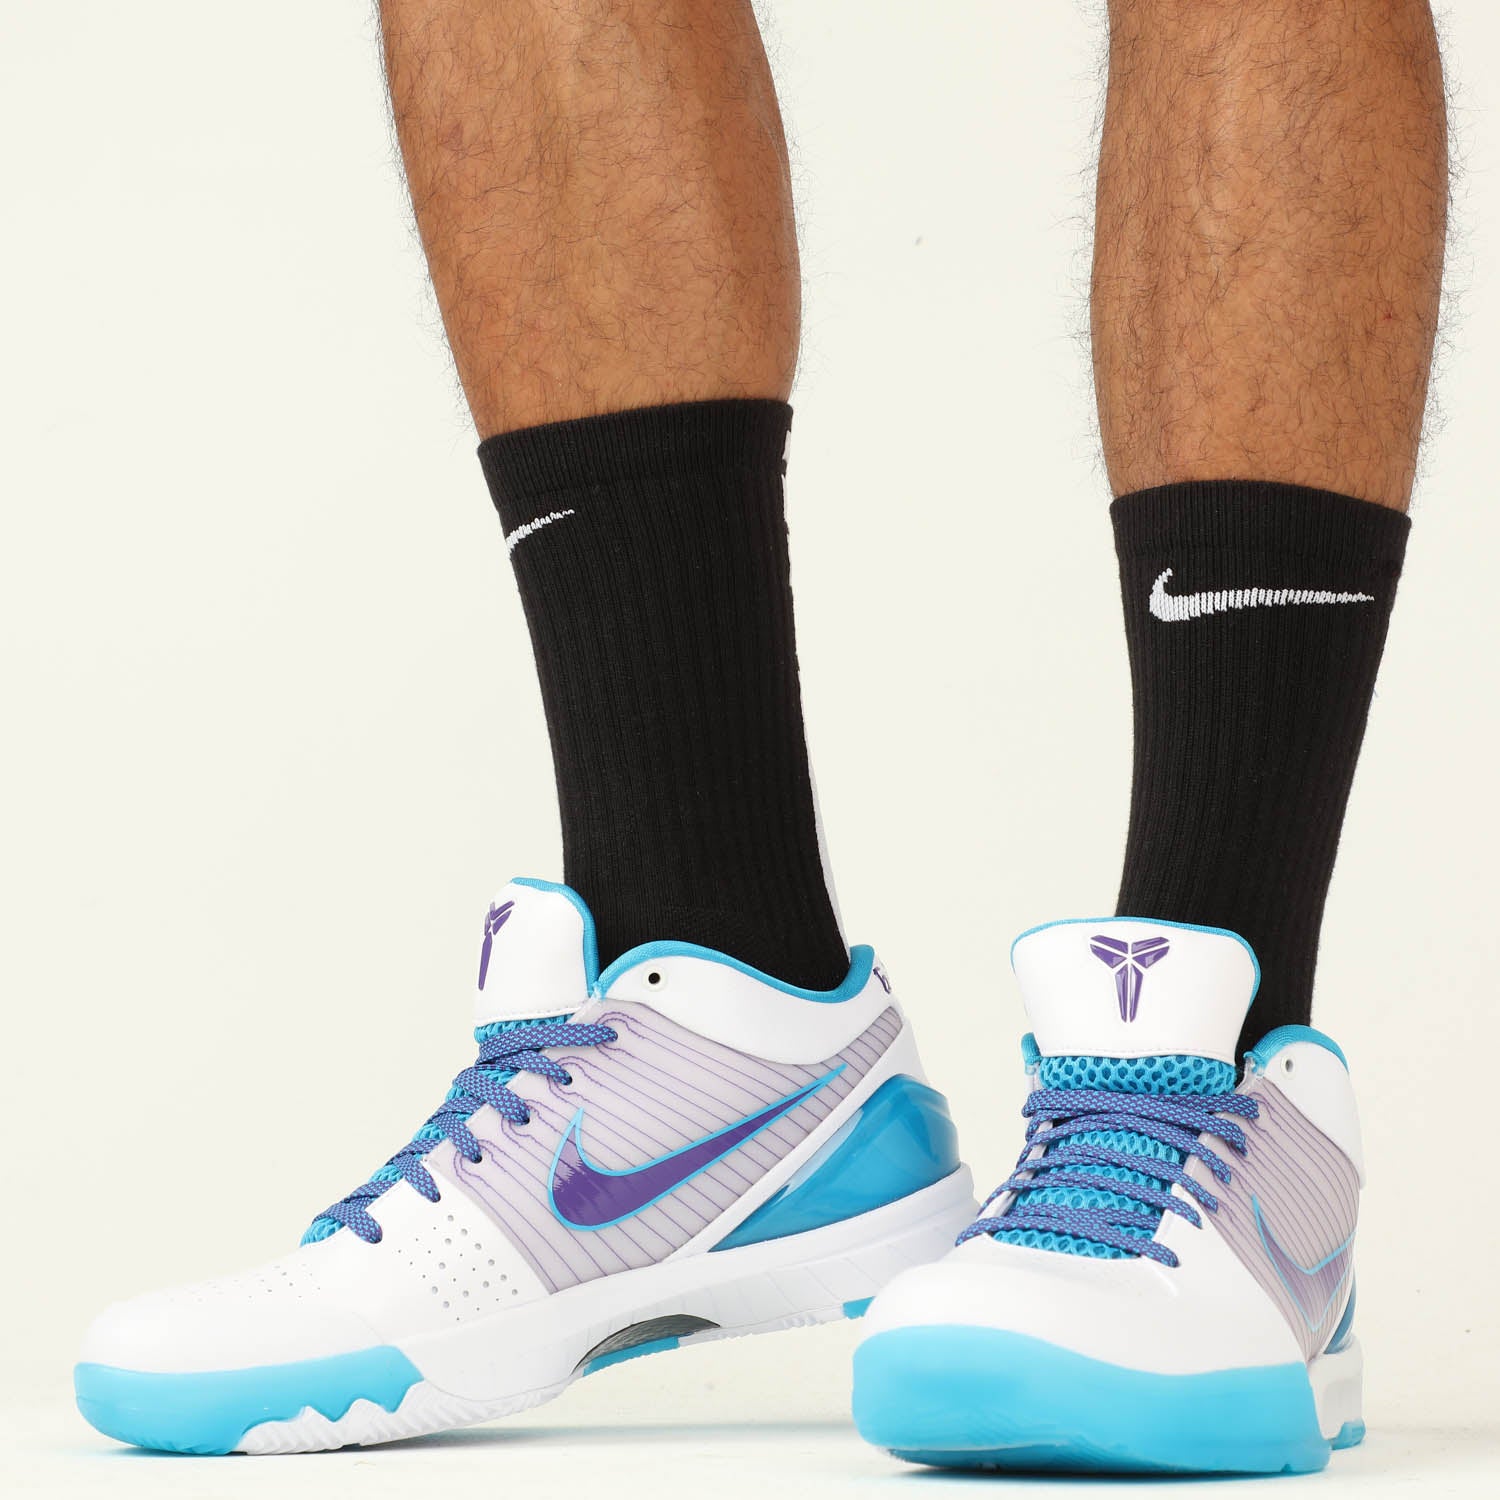 Nike Kobe IV Protro White/Purple/Blue 